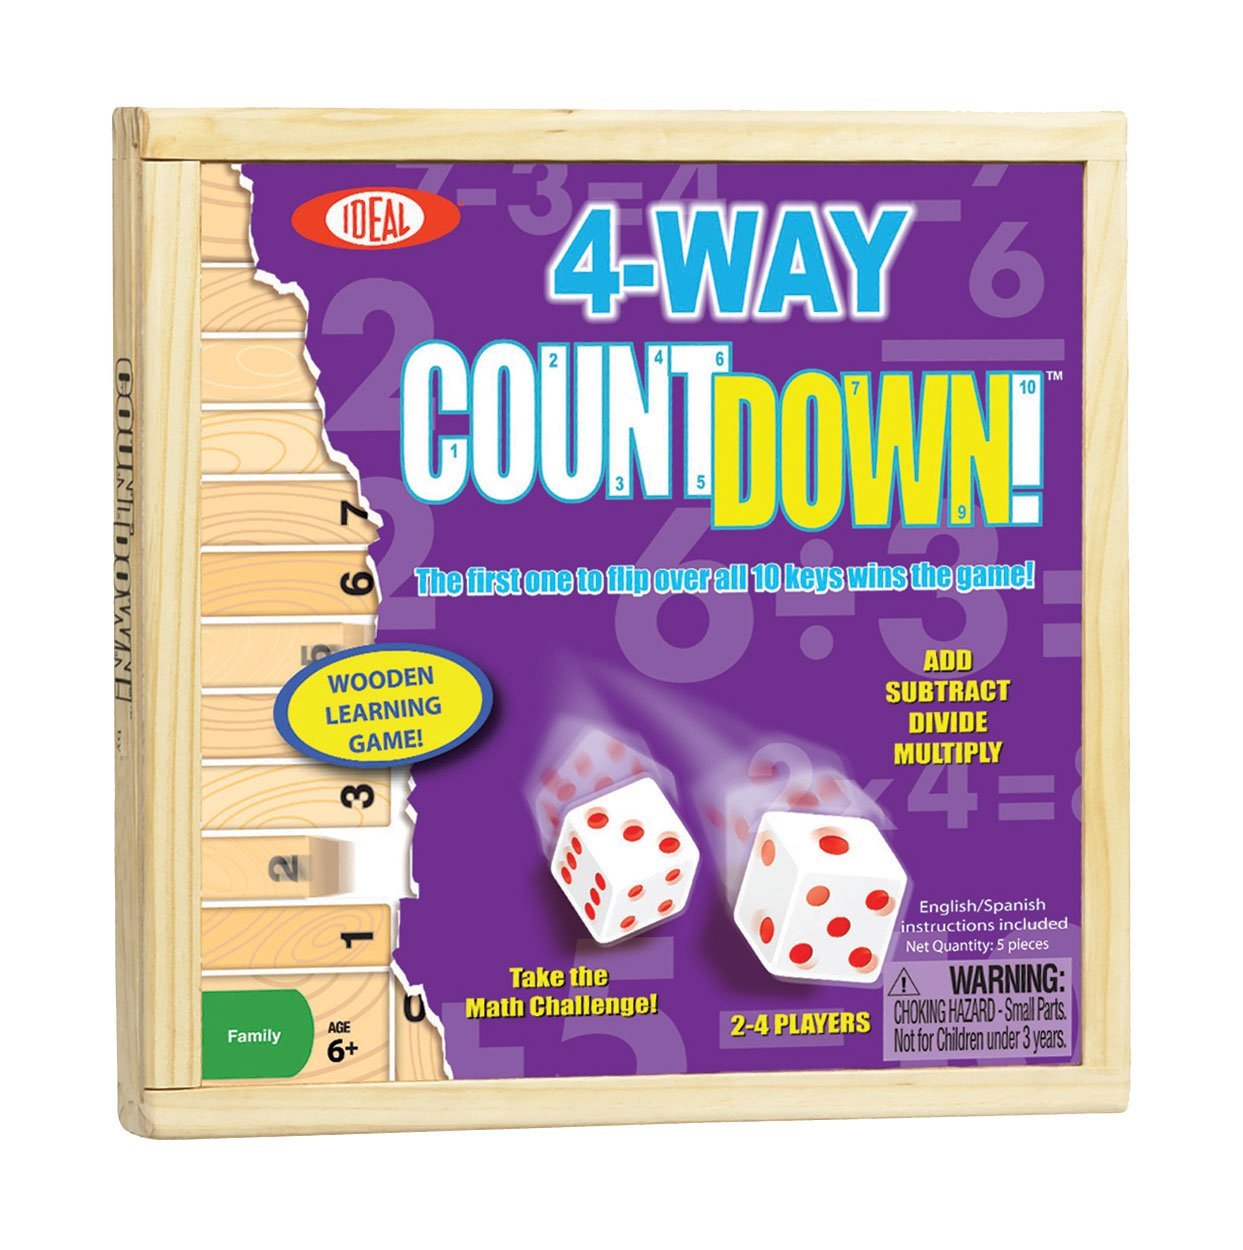 4-Way Countdown